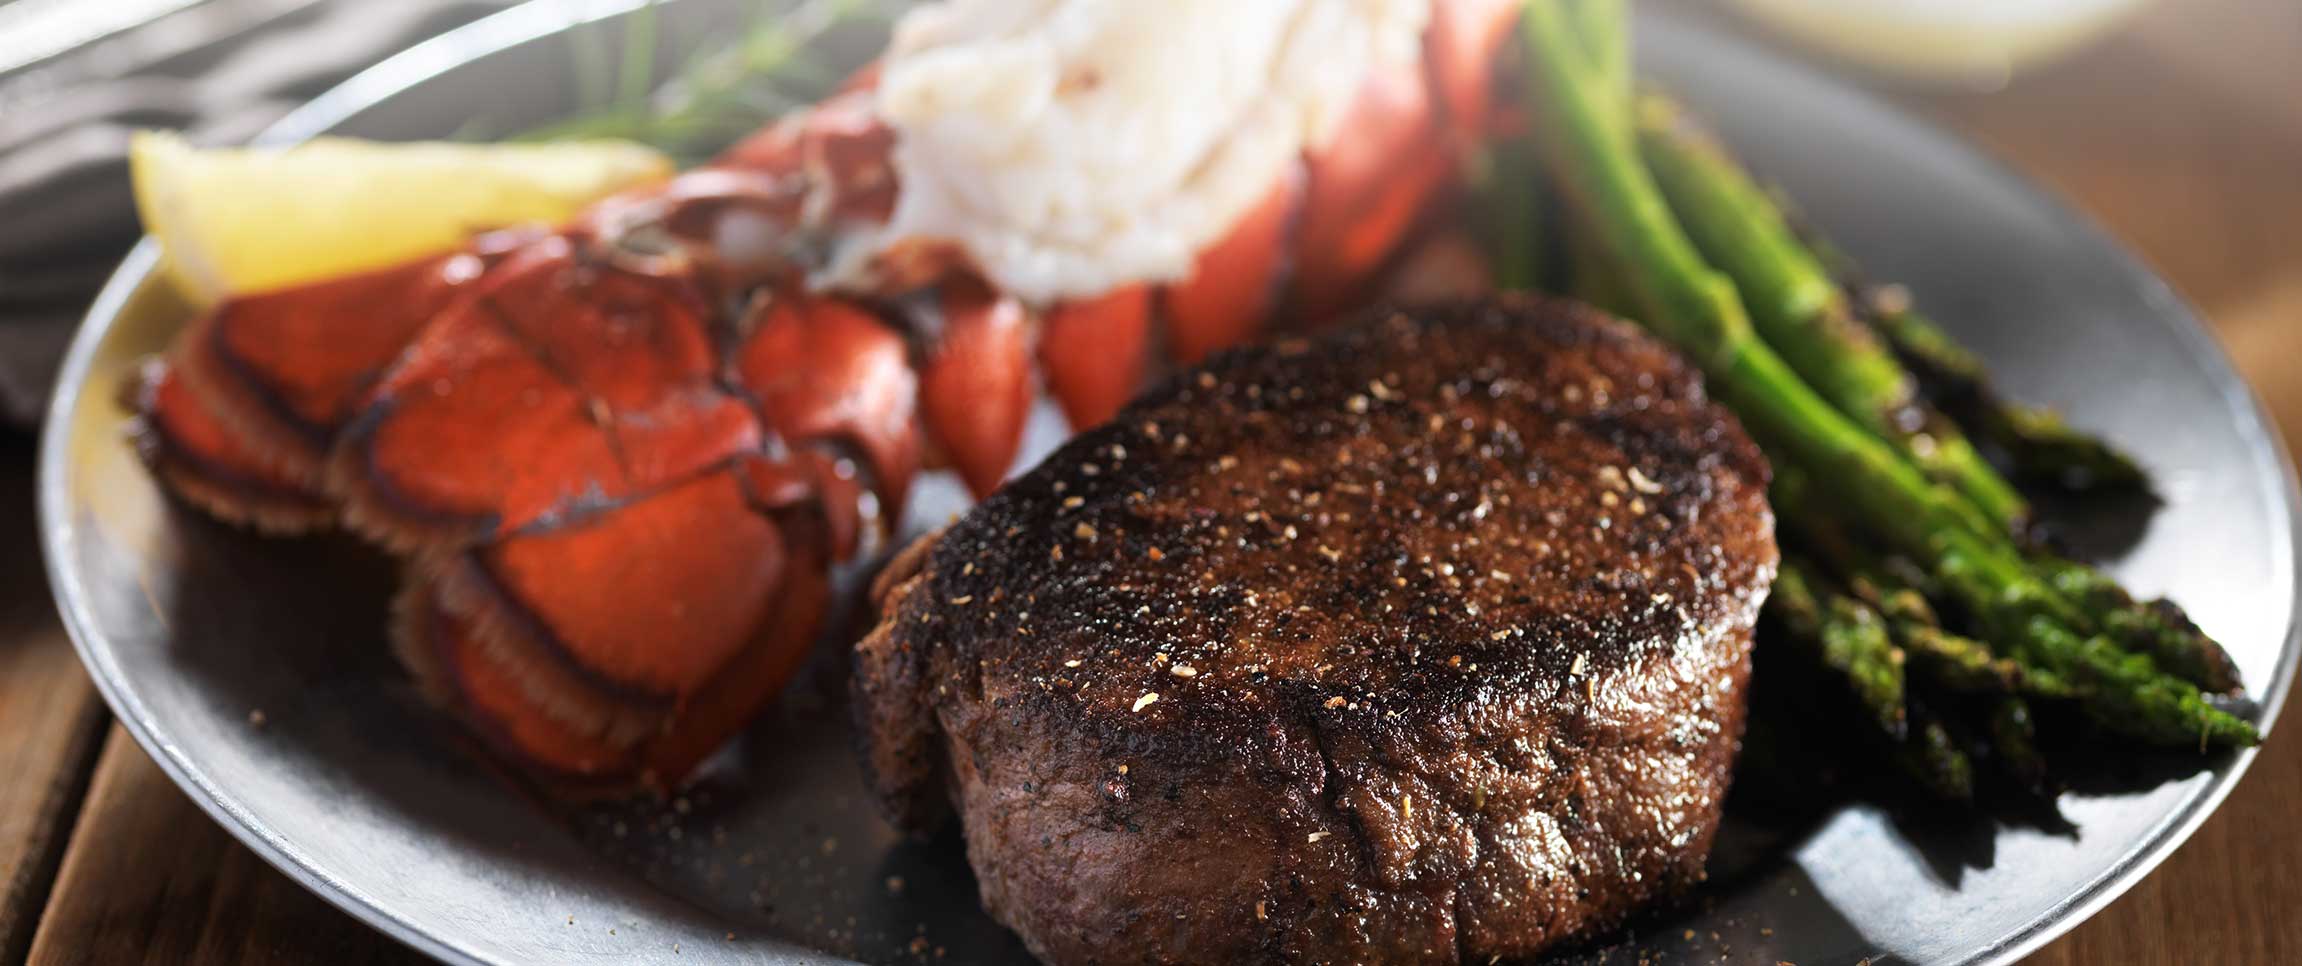 Lobster Steak with Filet of Braveheart Beef